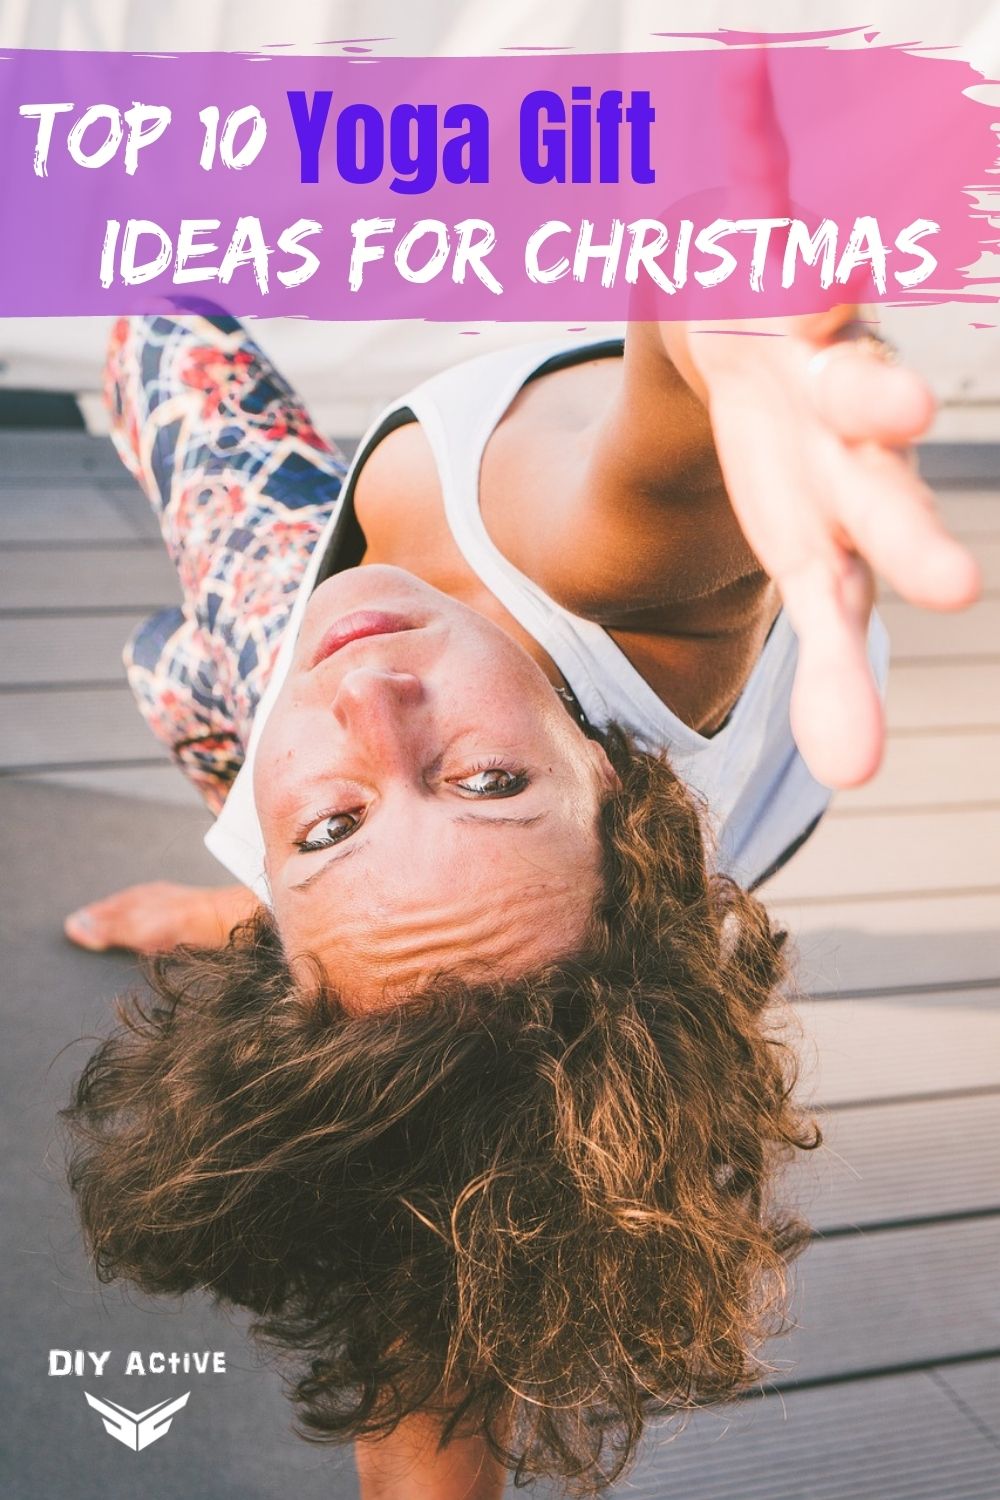 Top 10 Yoga Gift Ideas For Christmas